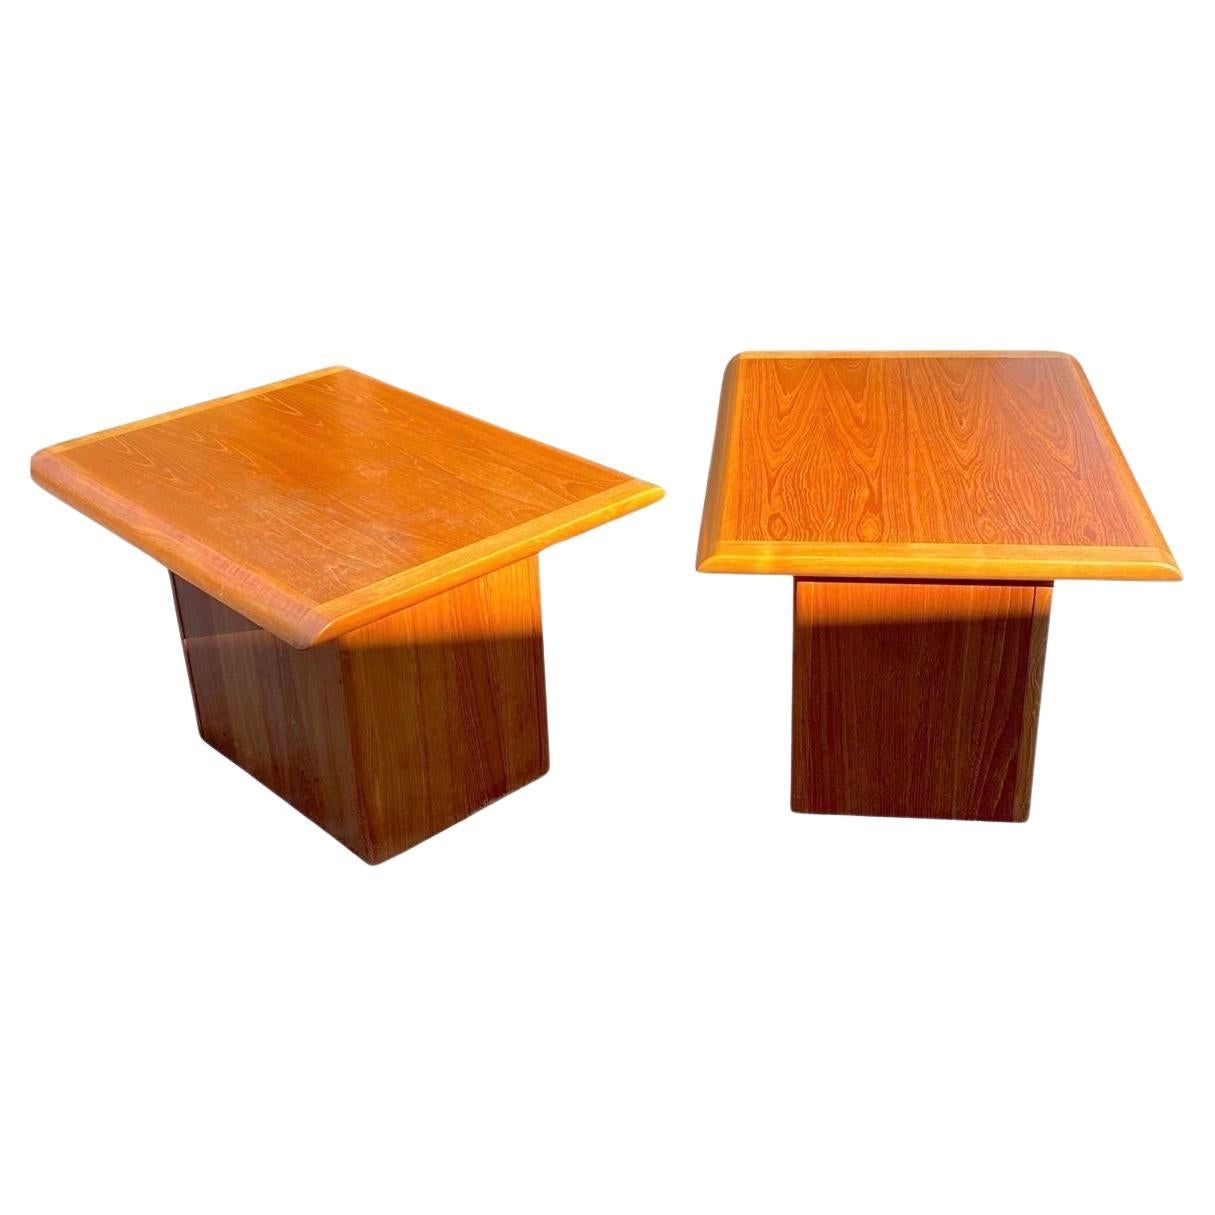 1960’s Danish Modern Pedestal Teak Side Tables, a Pair